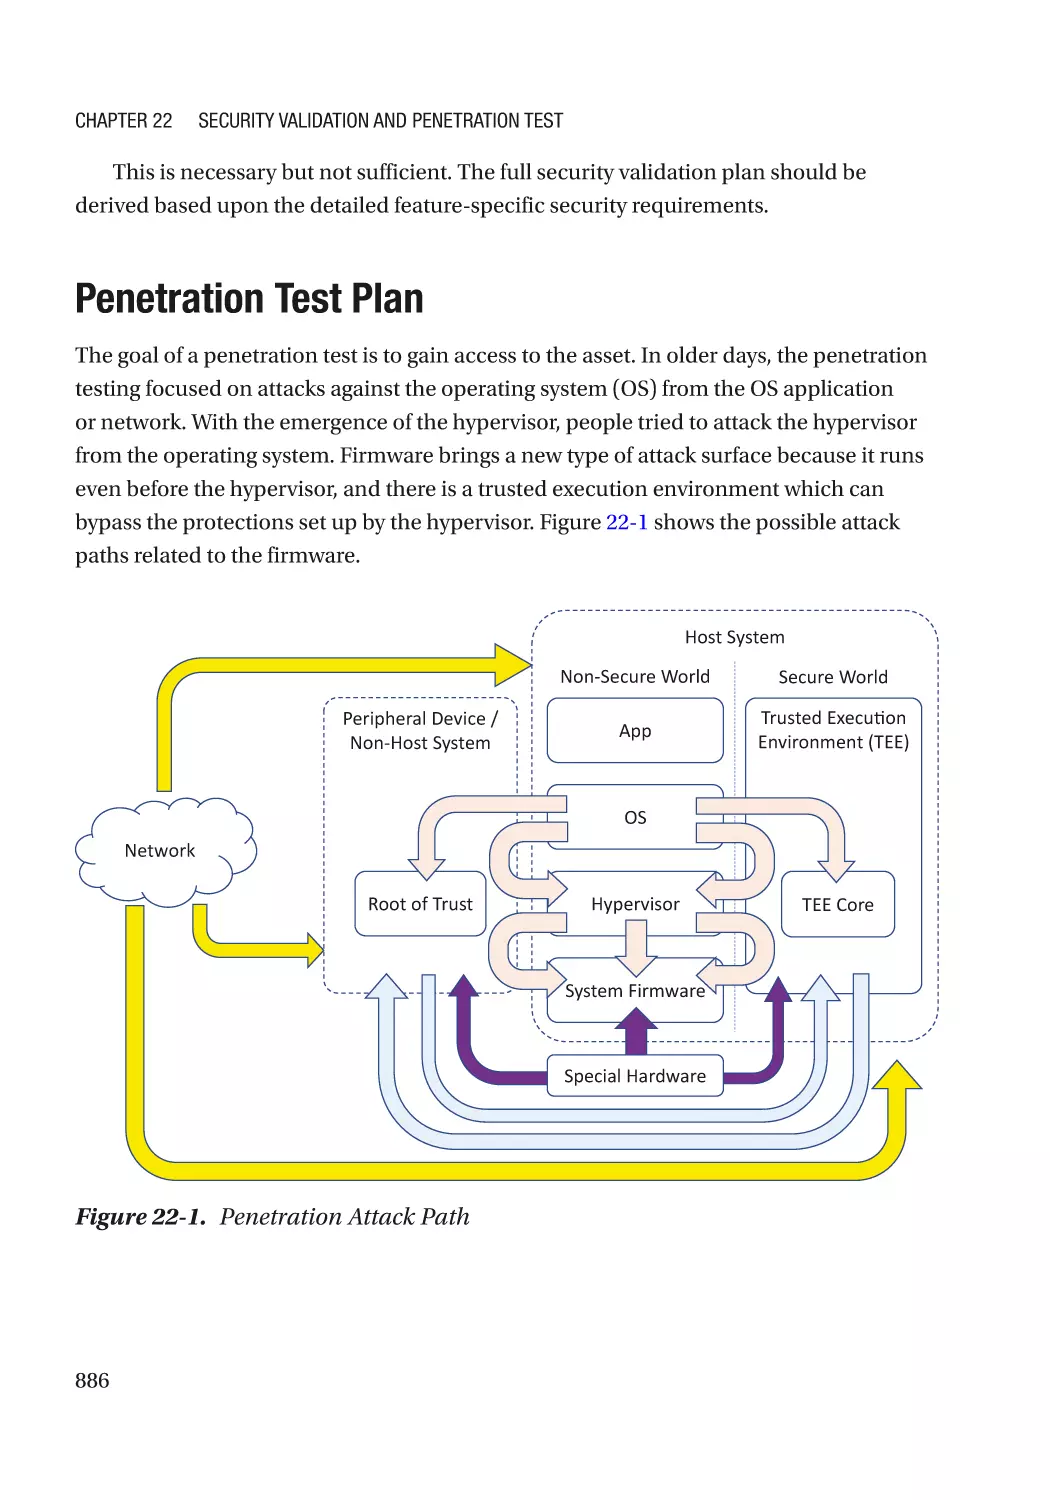 Penetration Test Plan